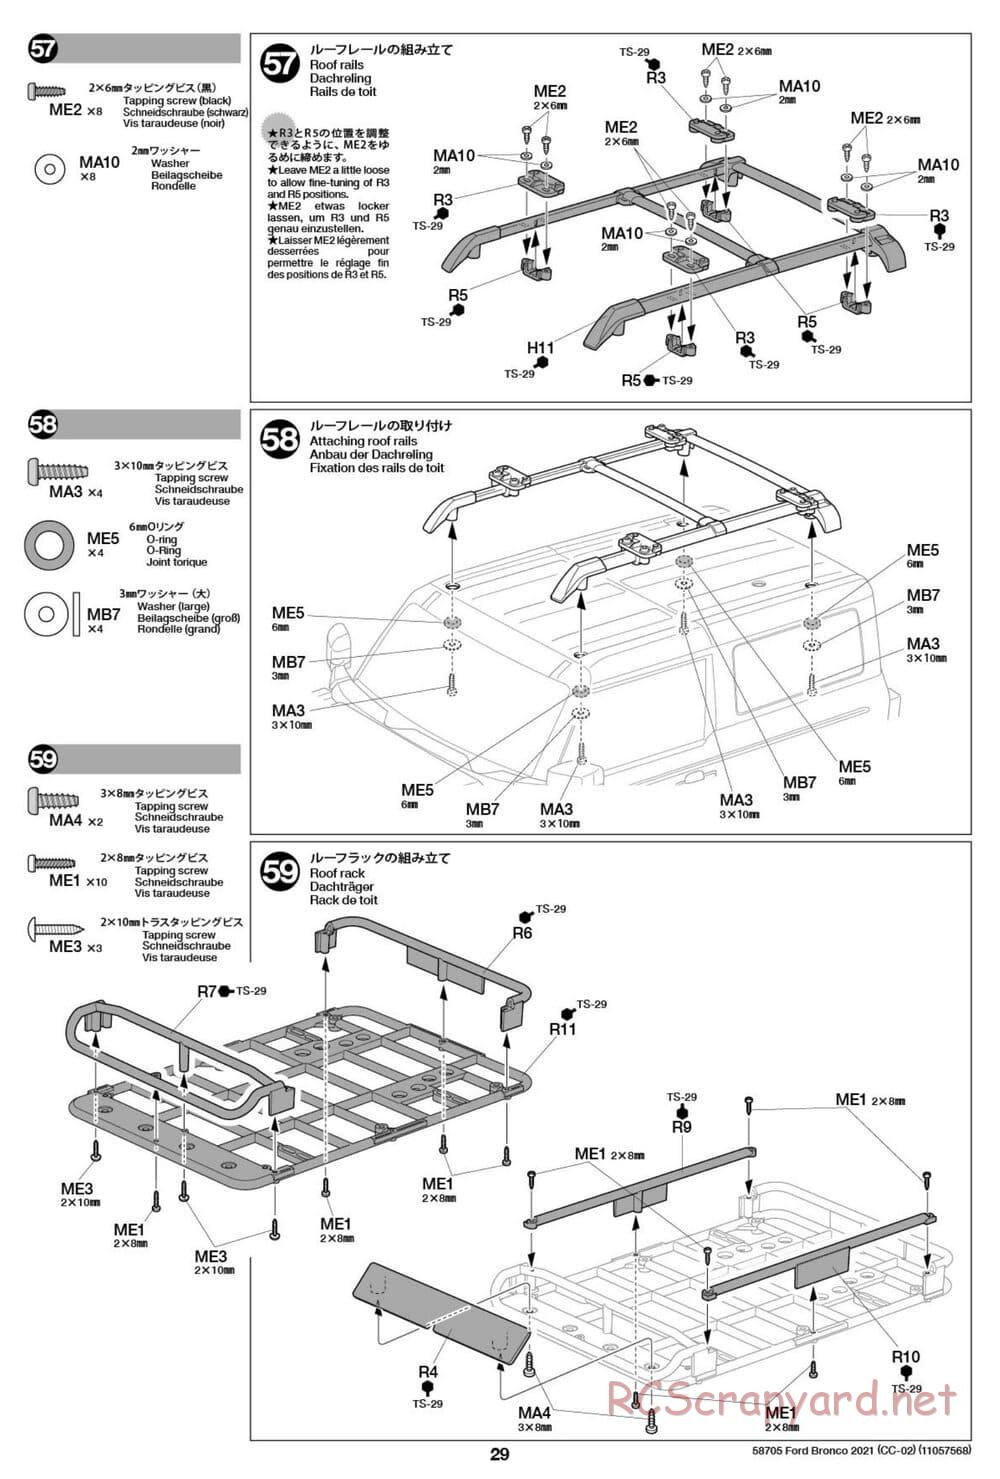 Tamiya - Ford Bronco 2021 - CC-02 Chassis - Manual - Page 29